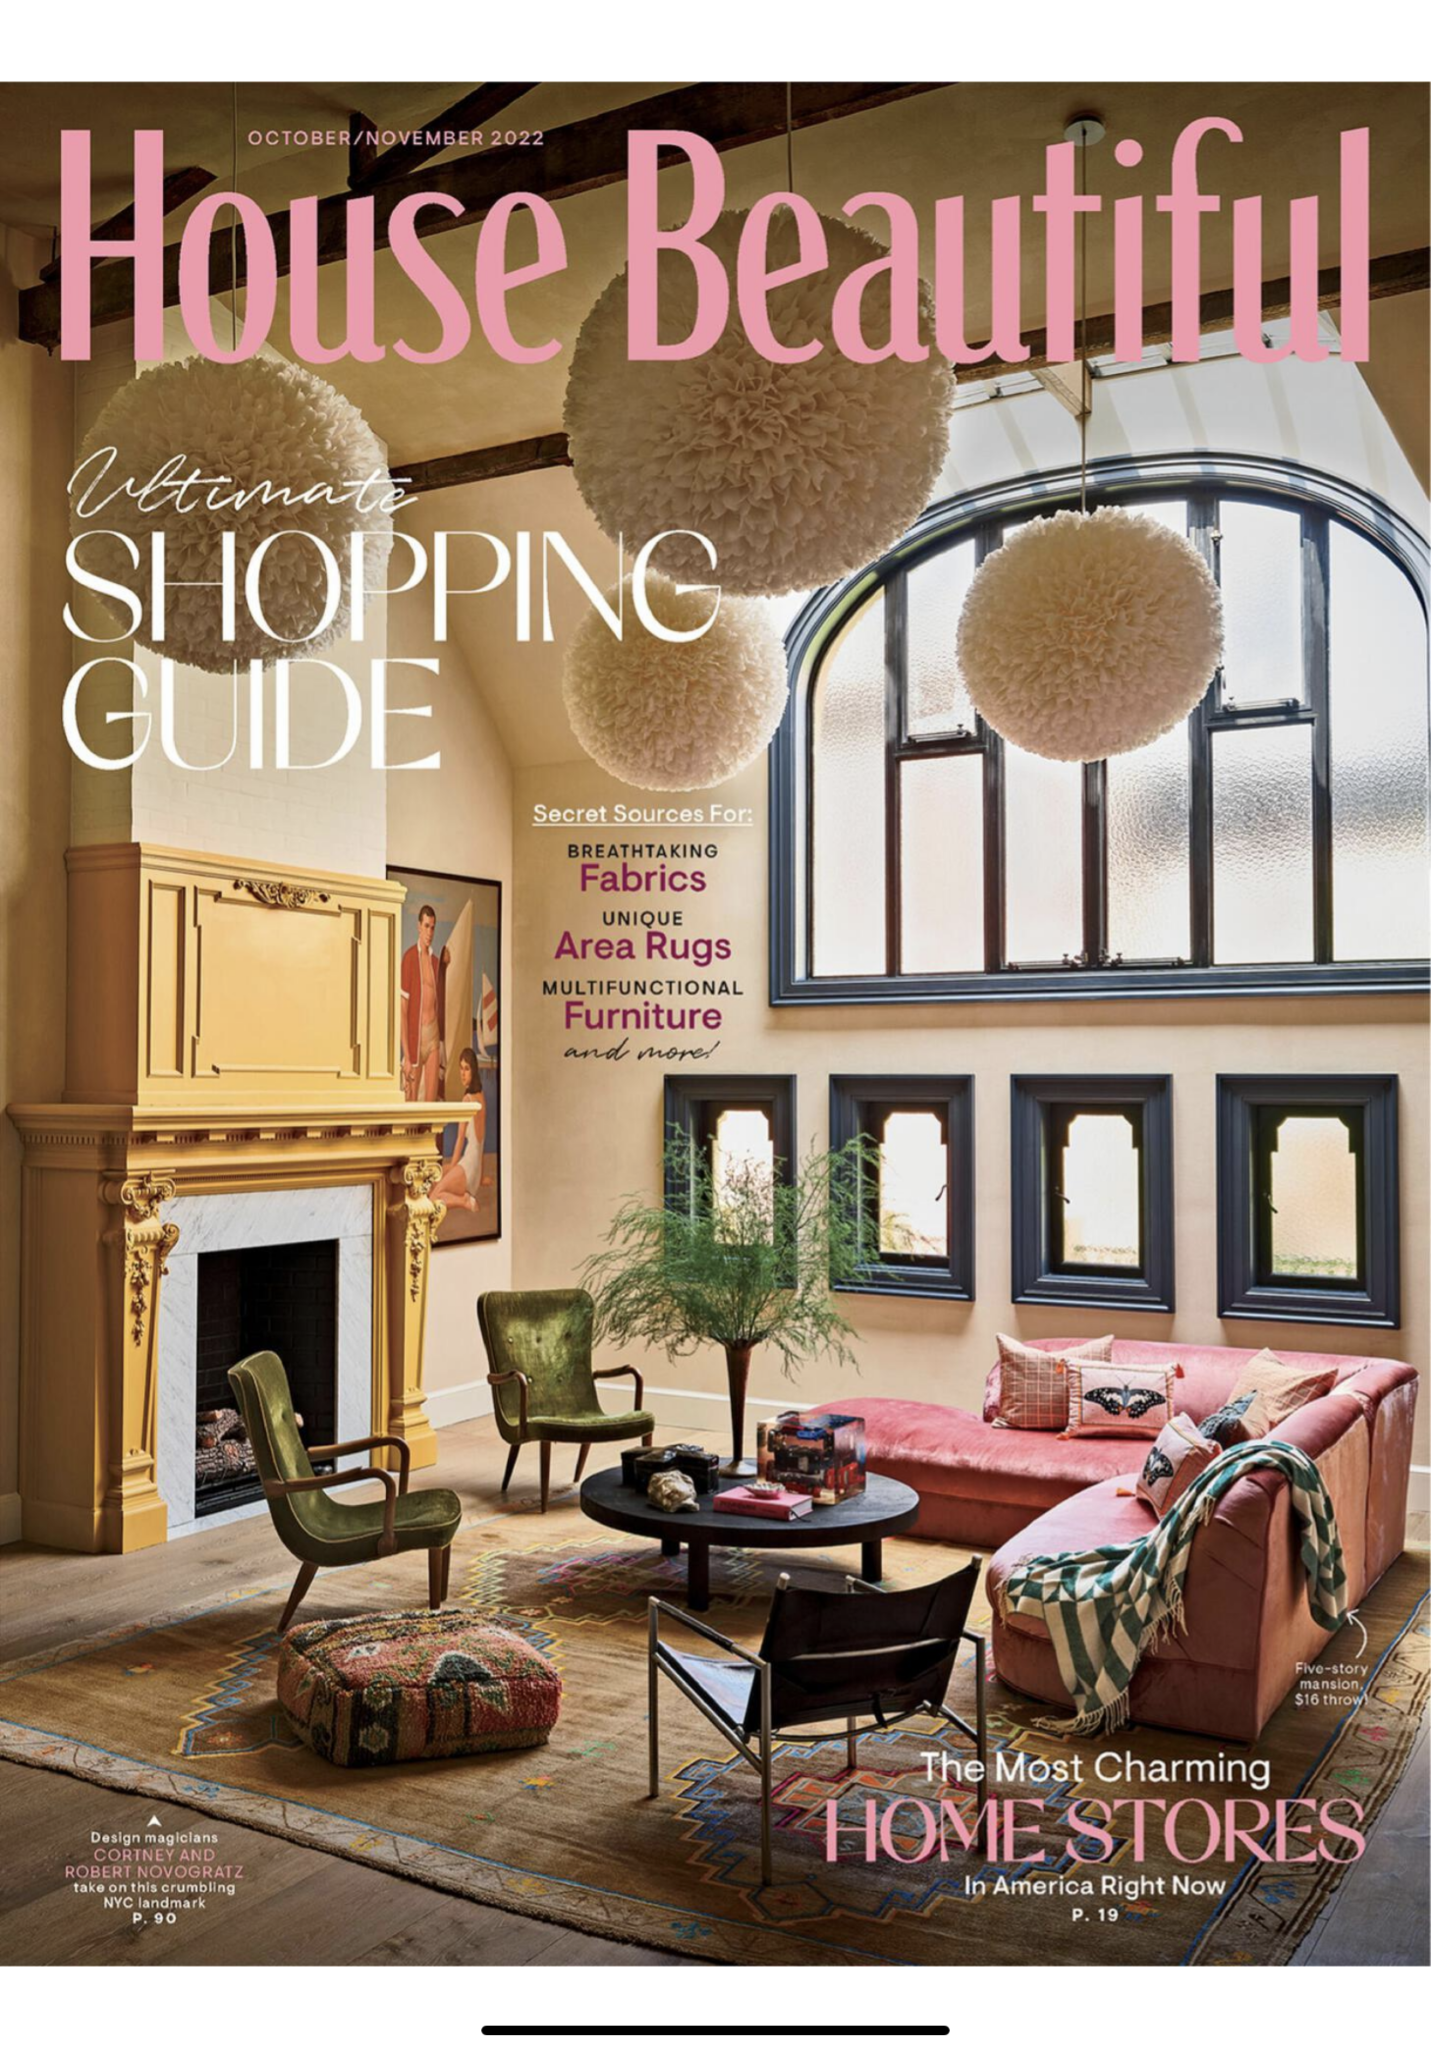 House Beautiful Magazine Oct 2022 Cover